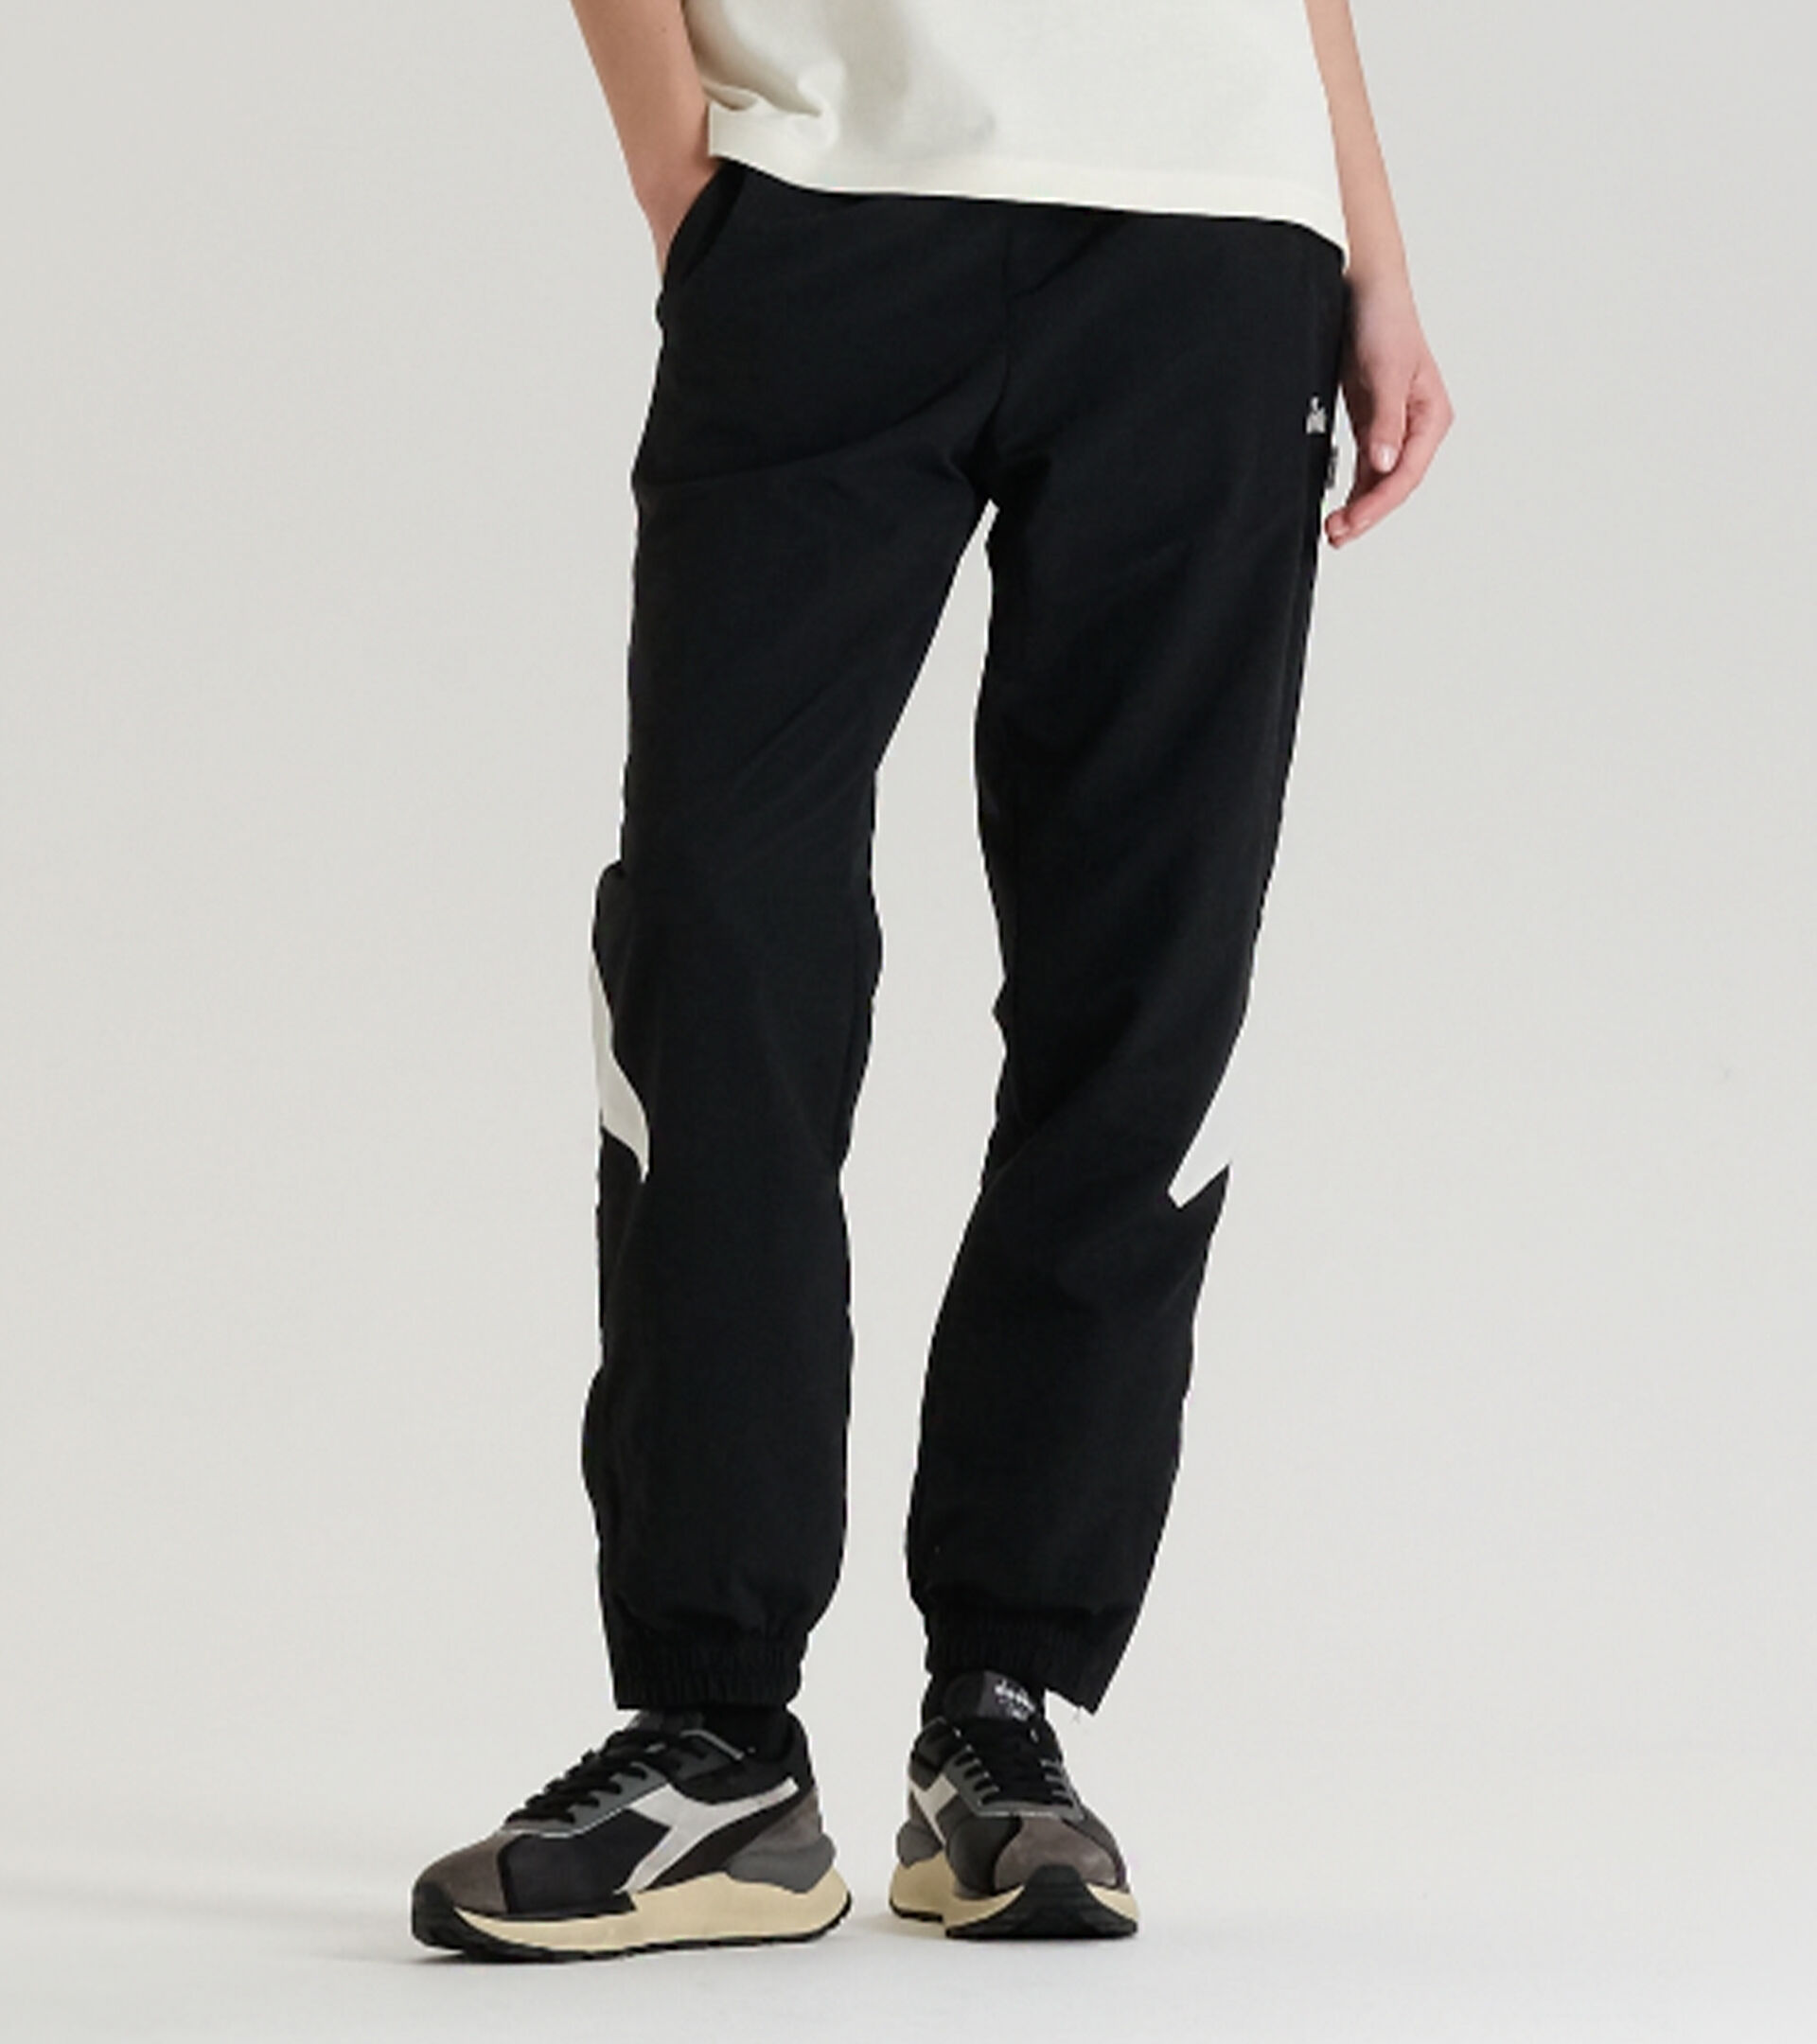 Pantaloni sportivi  - Made in Italy - Gender Neutral TRACK PANTS LEGACY NERO - Diadora